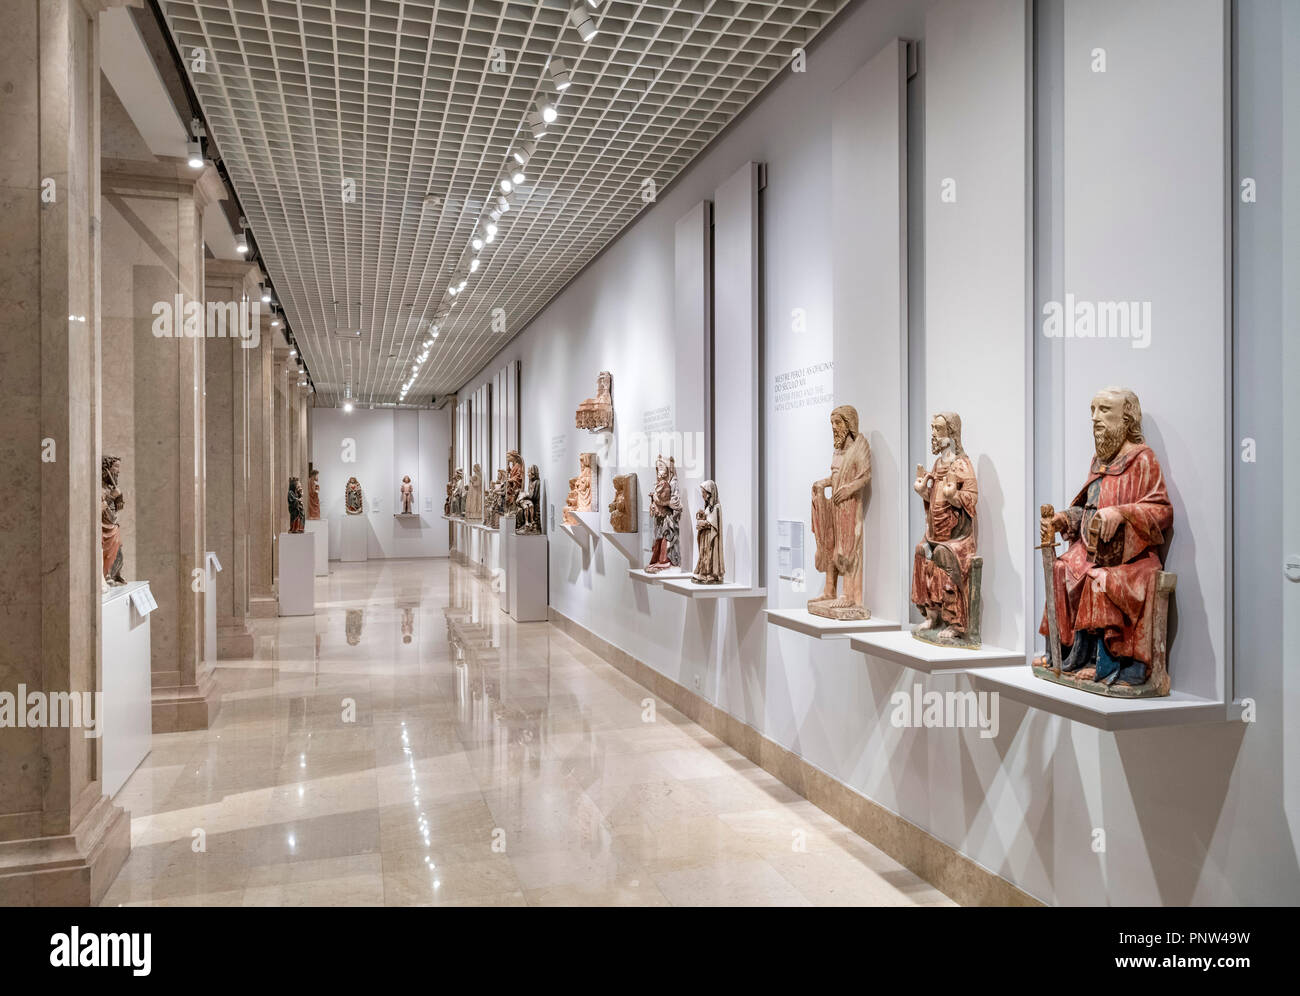 Gallery in the Museu Nacional de Arte Antiga (National Museum of Ancient Art) Lisbon, Portugal Stock Photo